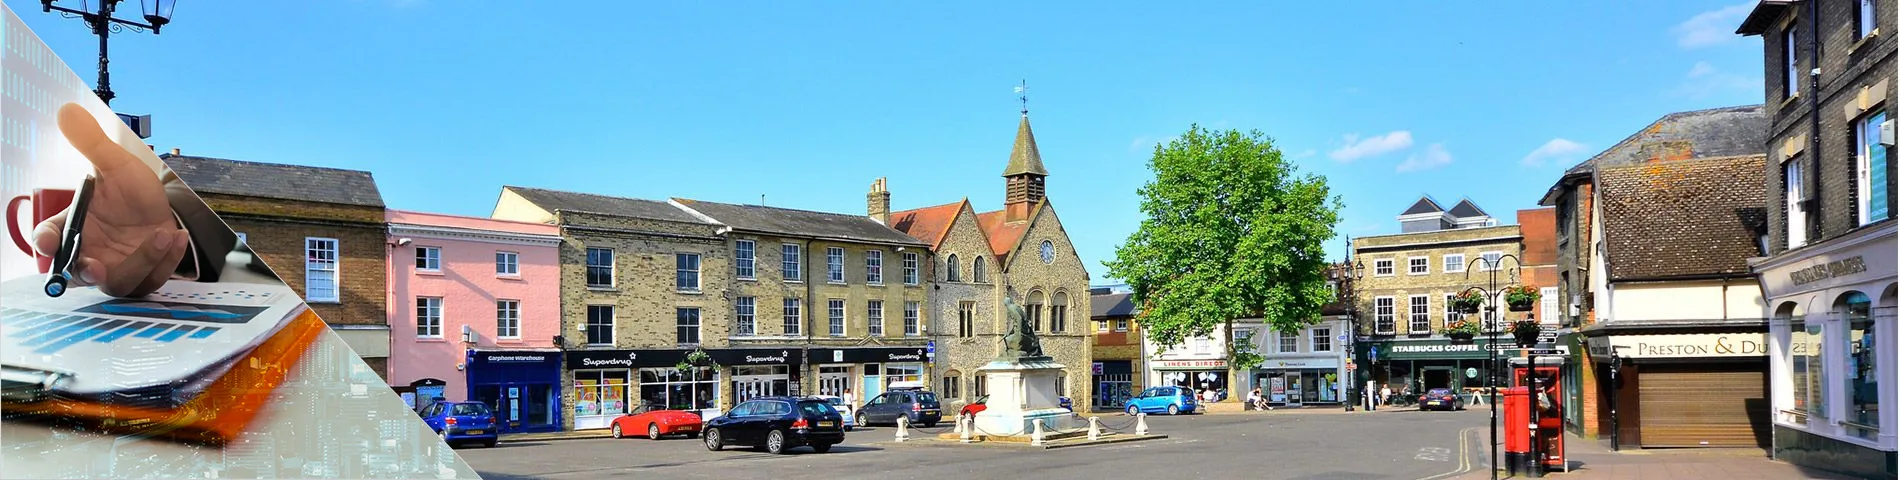 Bury St. Edmunds - Banking & finance